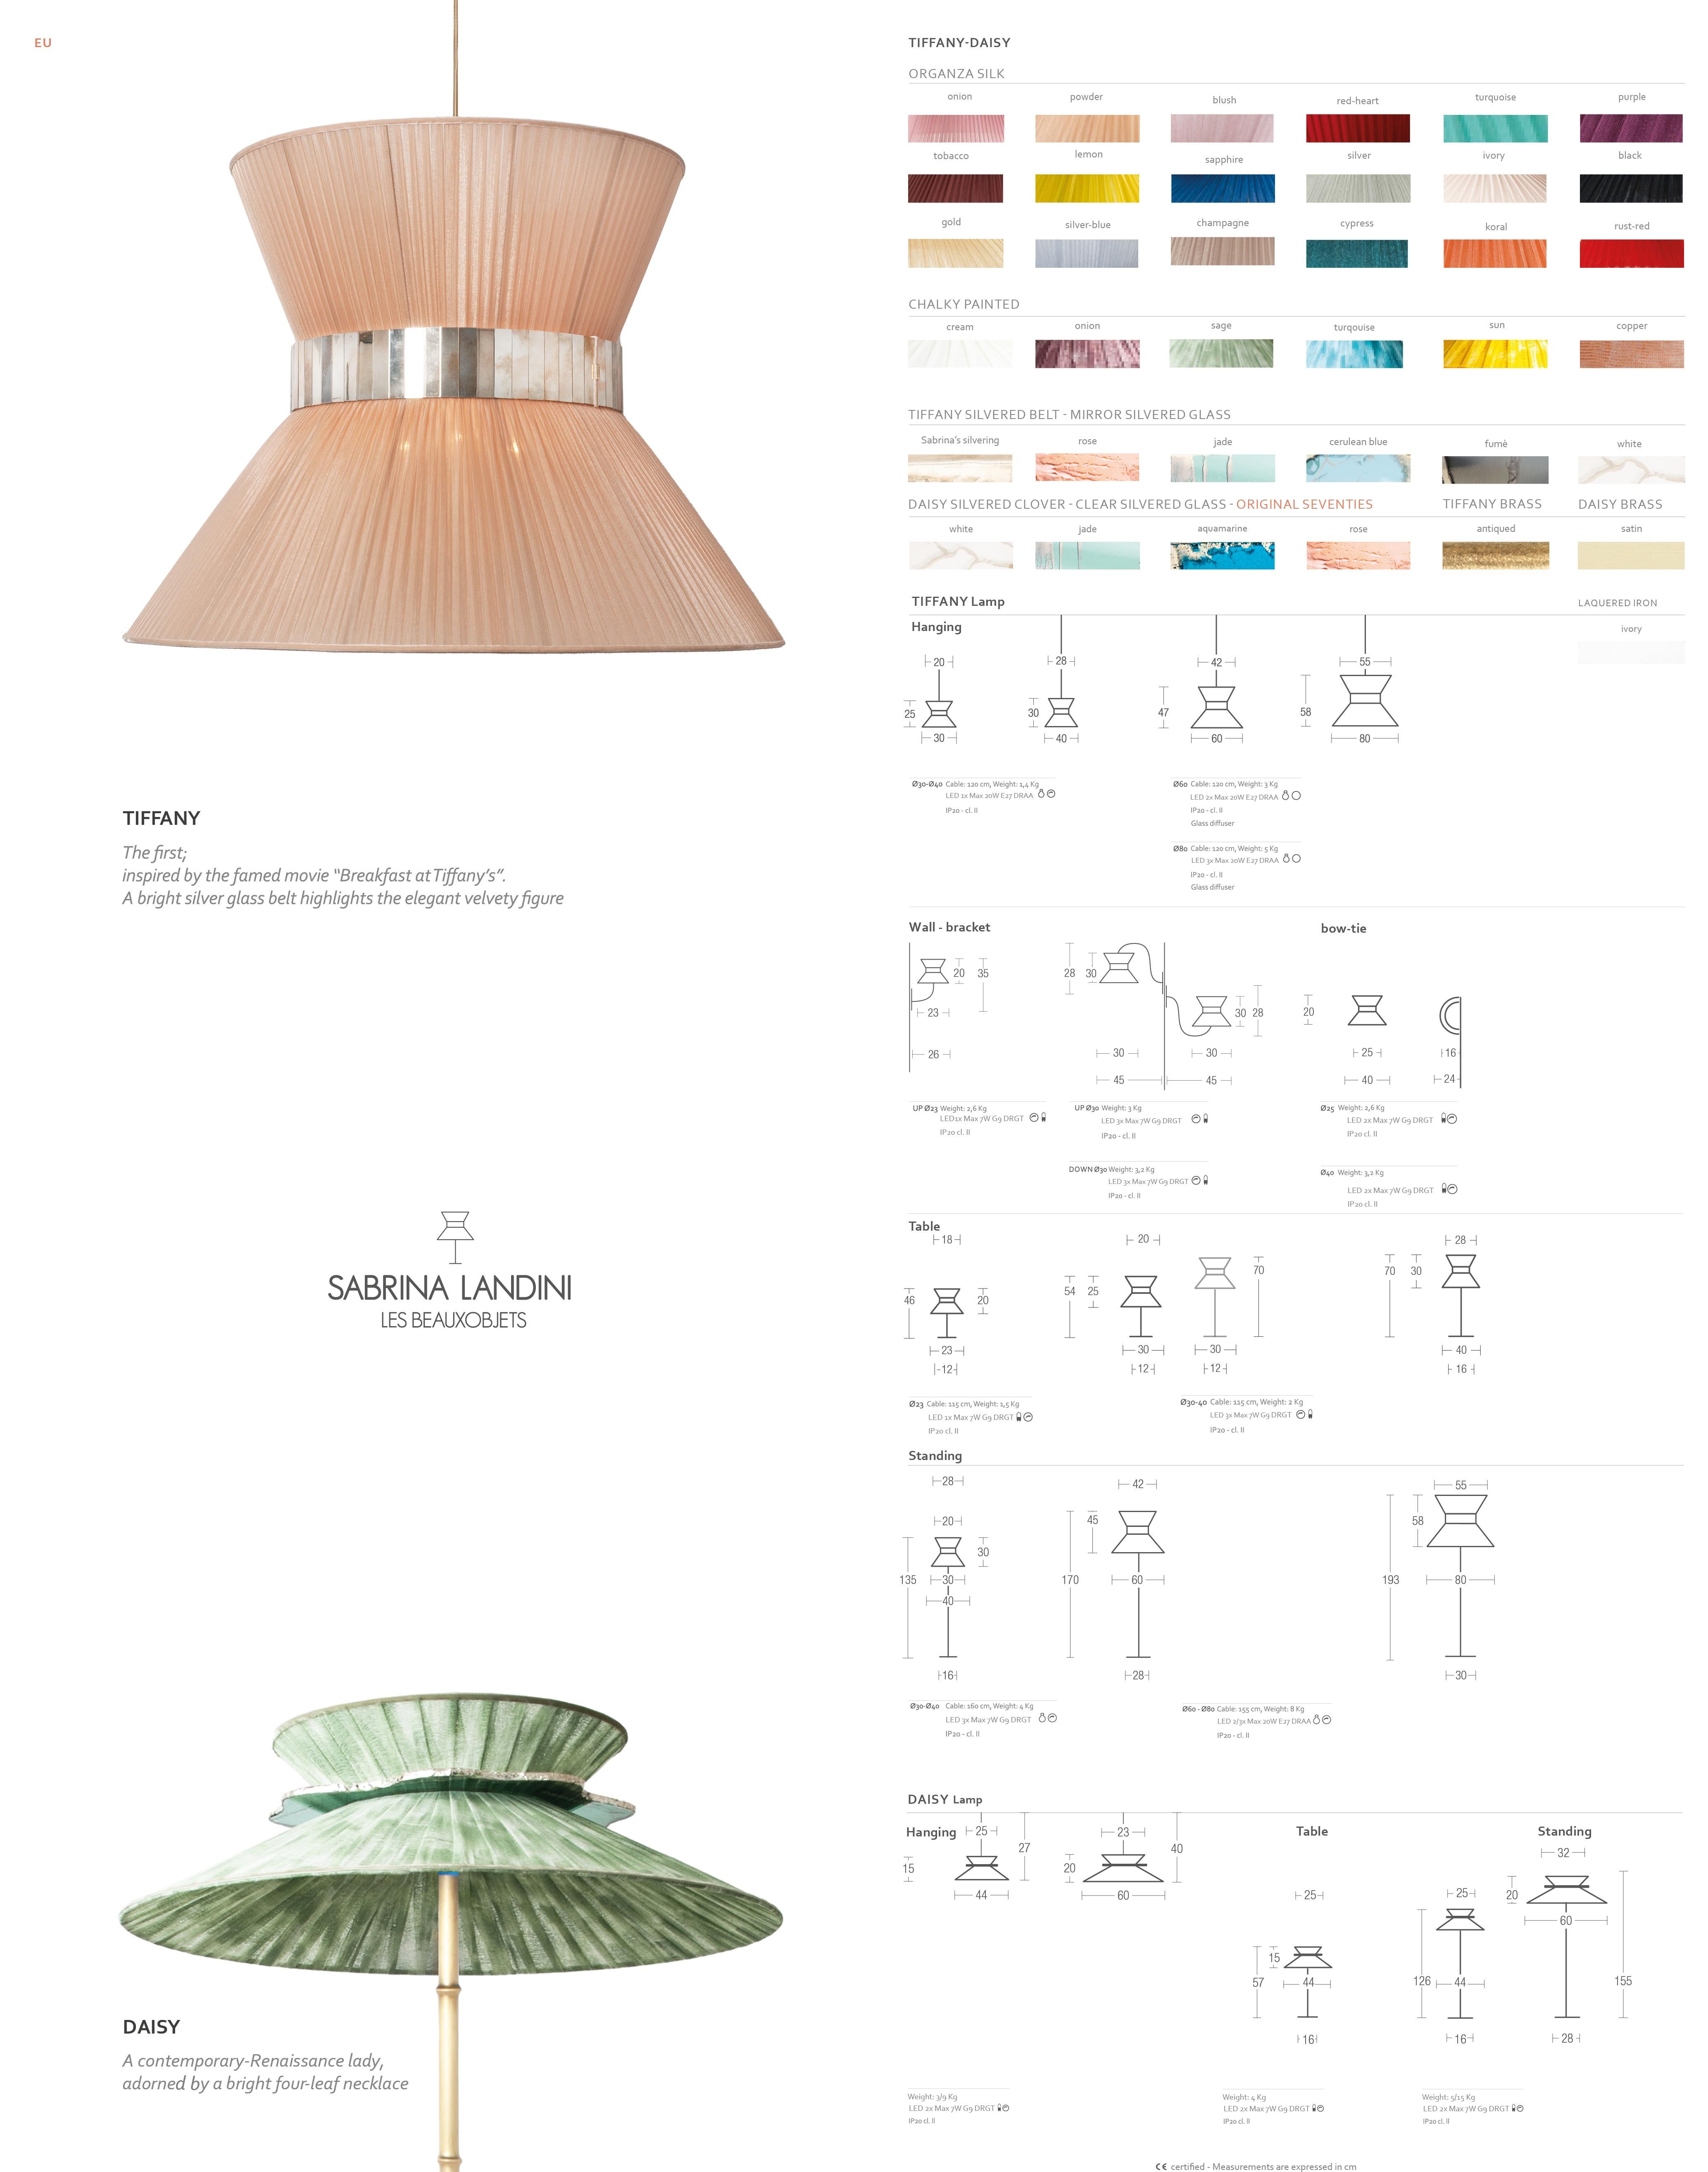 Tiffany Contemporary Stehlampe 80 Zitronenseide, Messing antikisiert, versilbertes Glas im Angebot 3